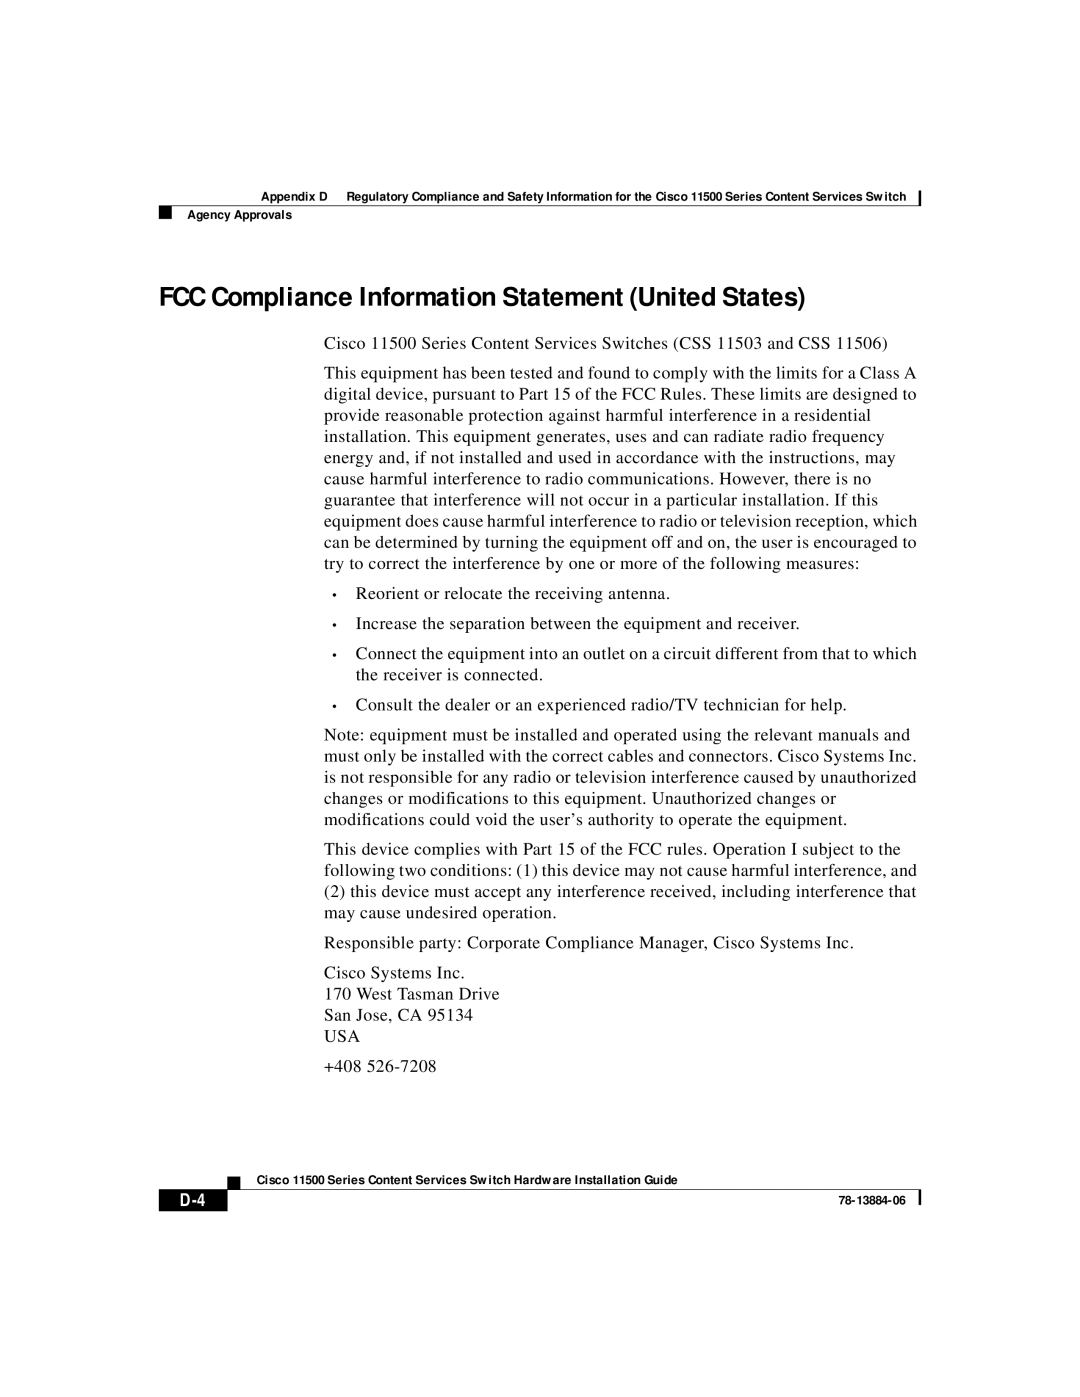 Cisco Systems 11506, 11503, 11501, 11500 appendix FCC Compliance Information Statement United States 